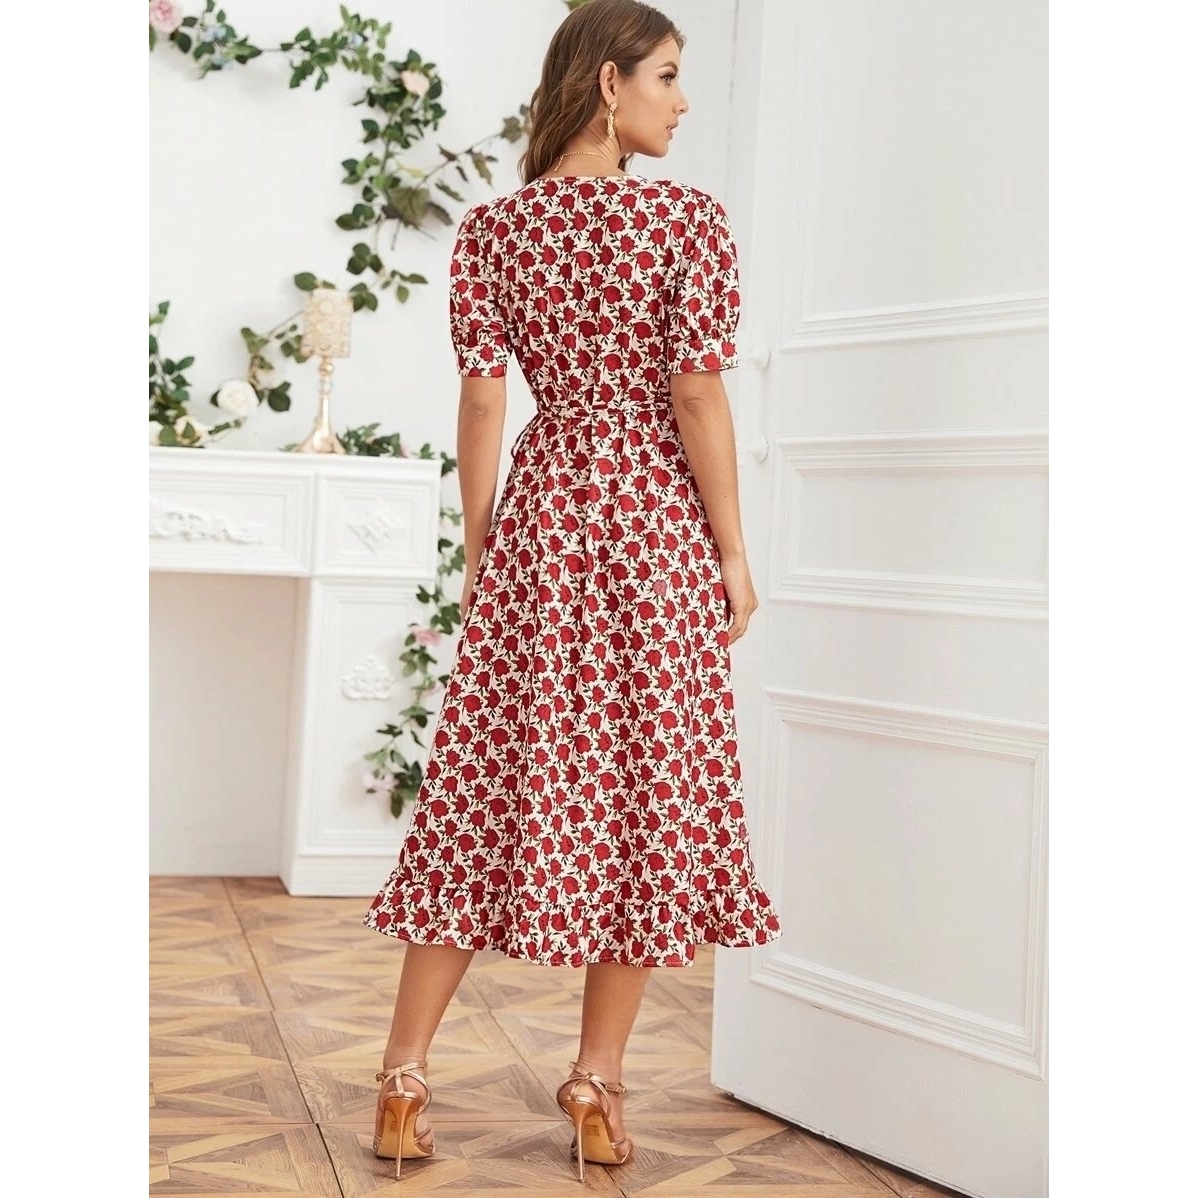 Floral Print Elastic Waist A-line Dress - Red, S